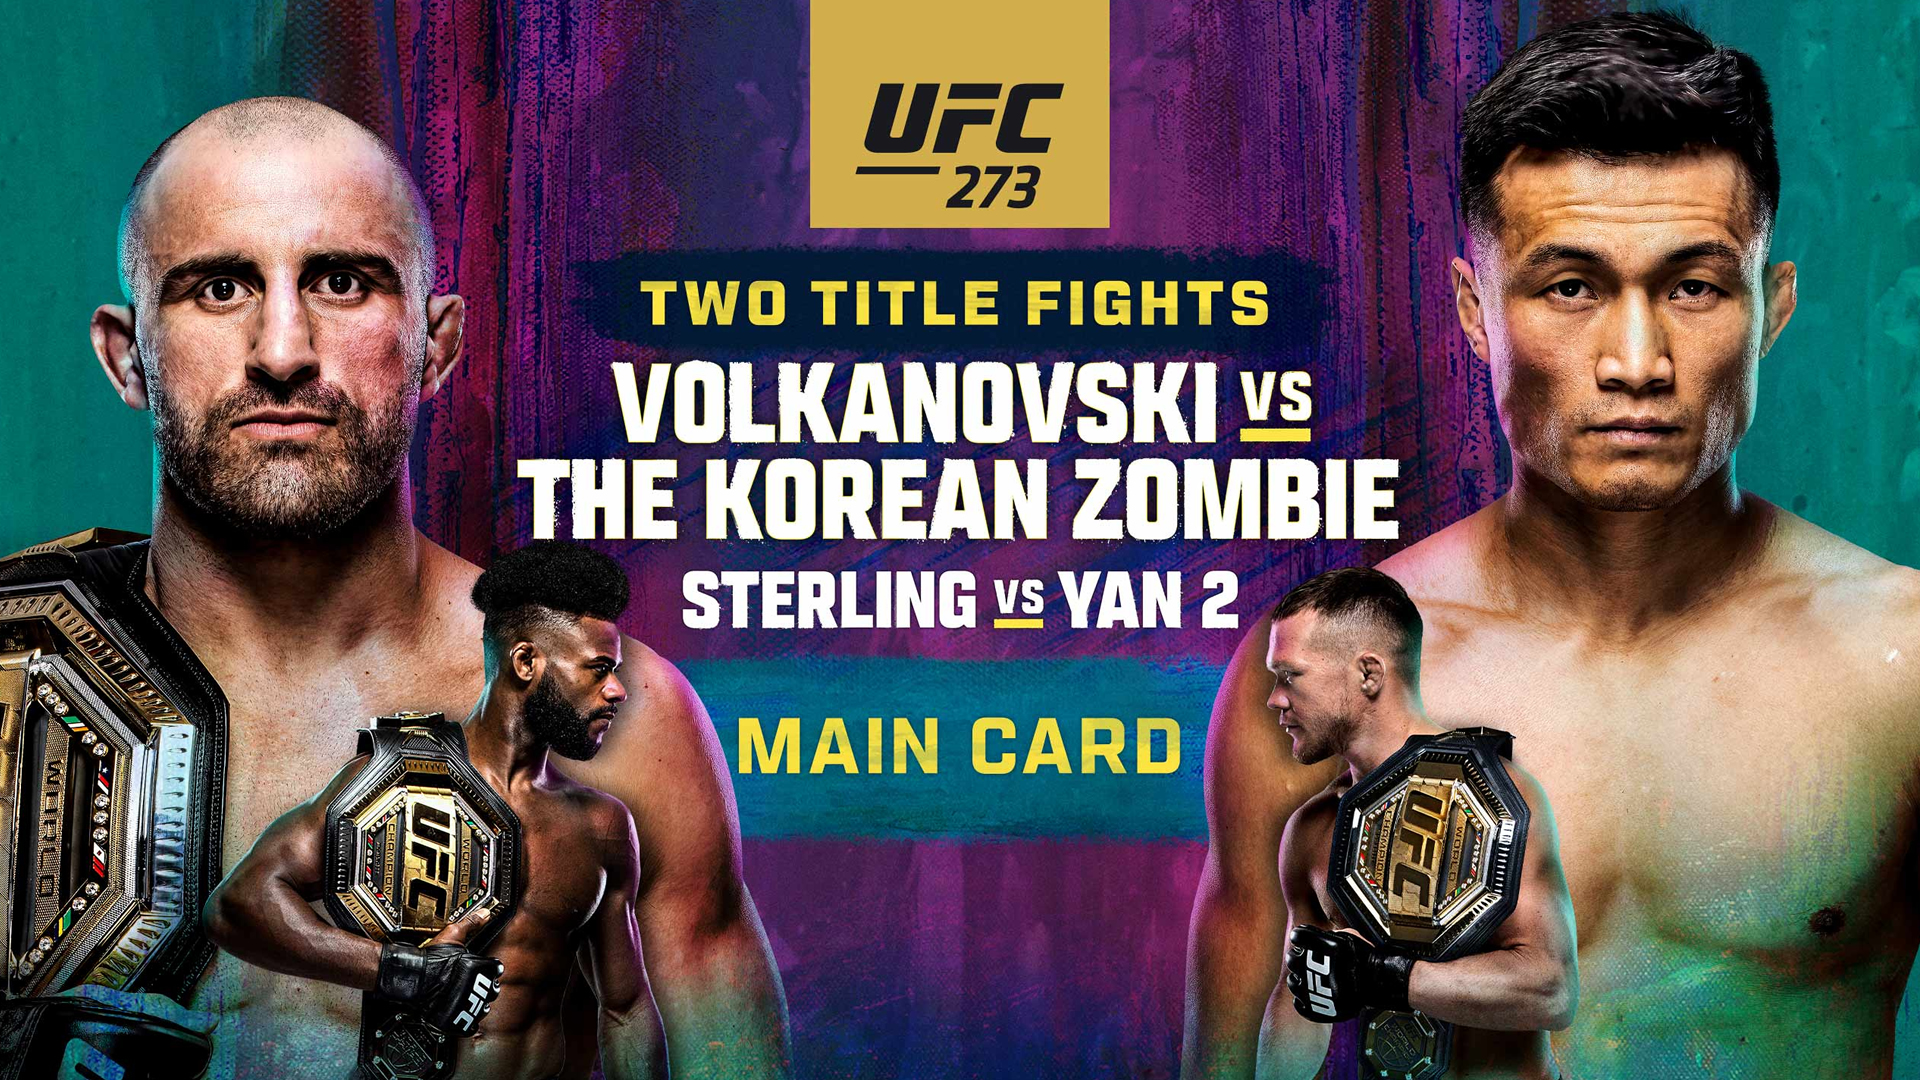 UFC 273 PPV live stream how to watch Volkanovski vs